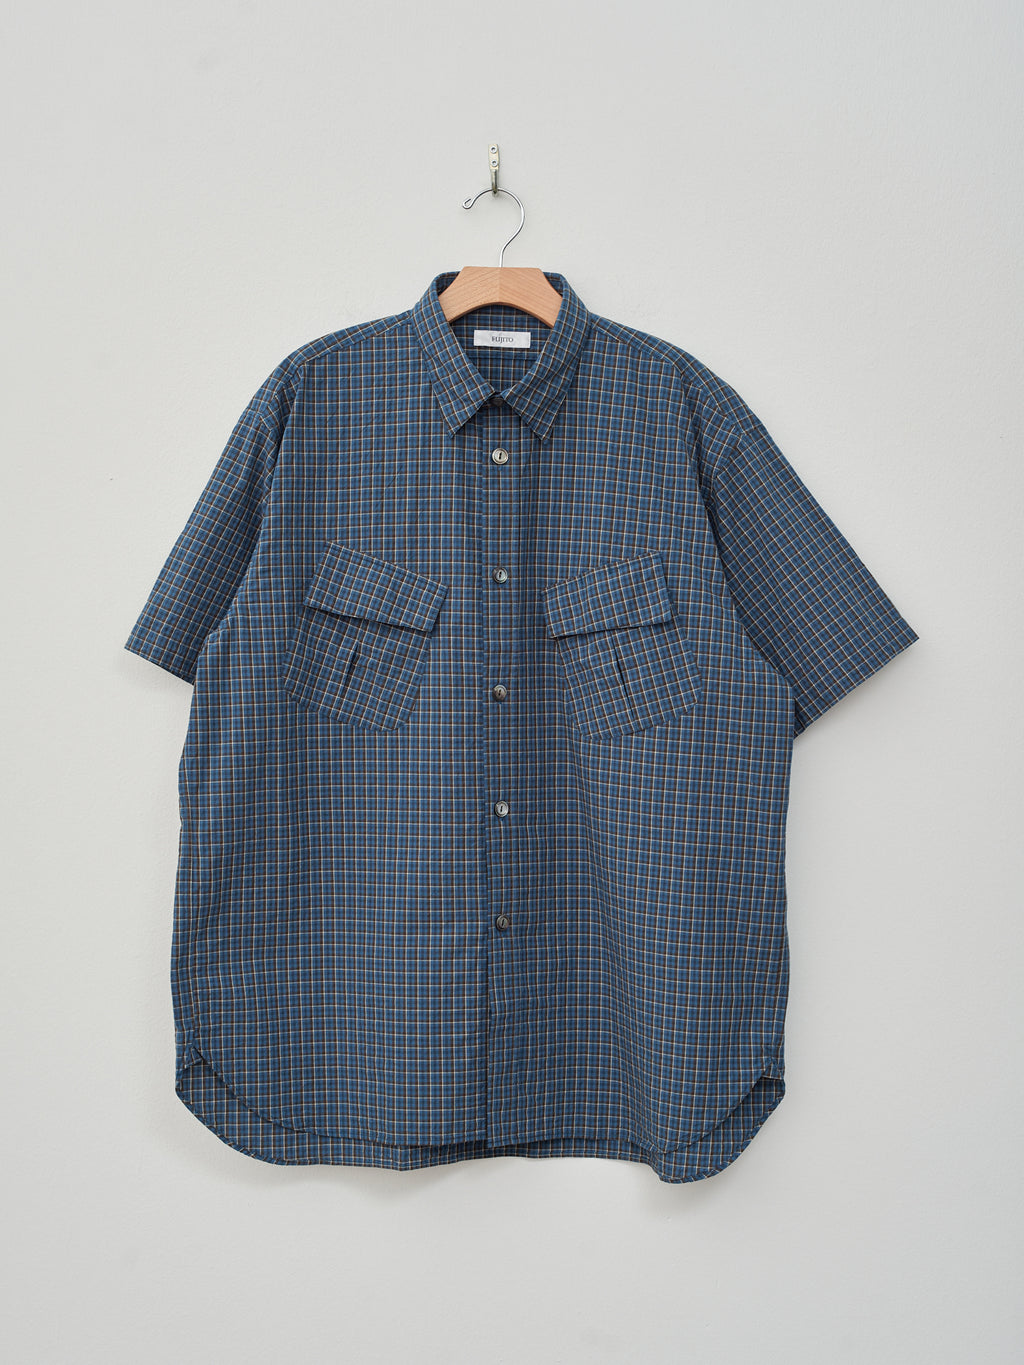 Namu Shop - Fujito S/S Fatigue Shirt - Blue Check